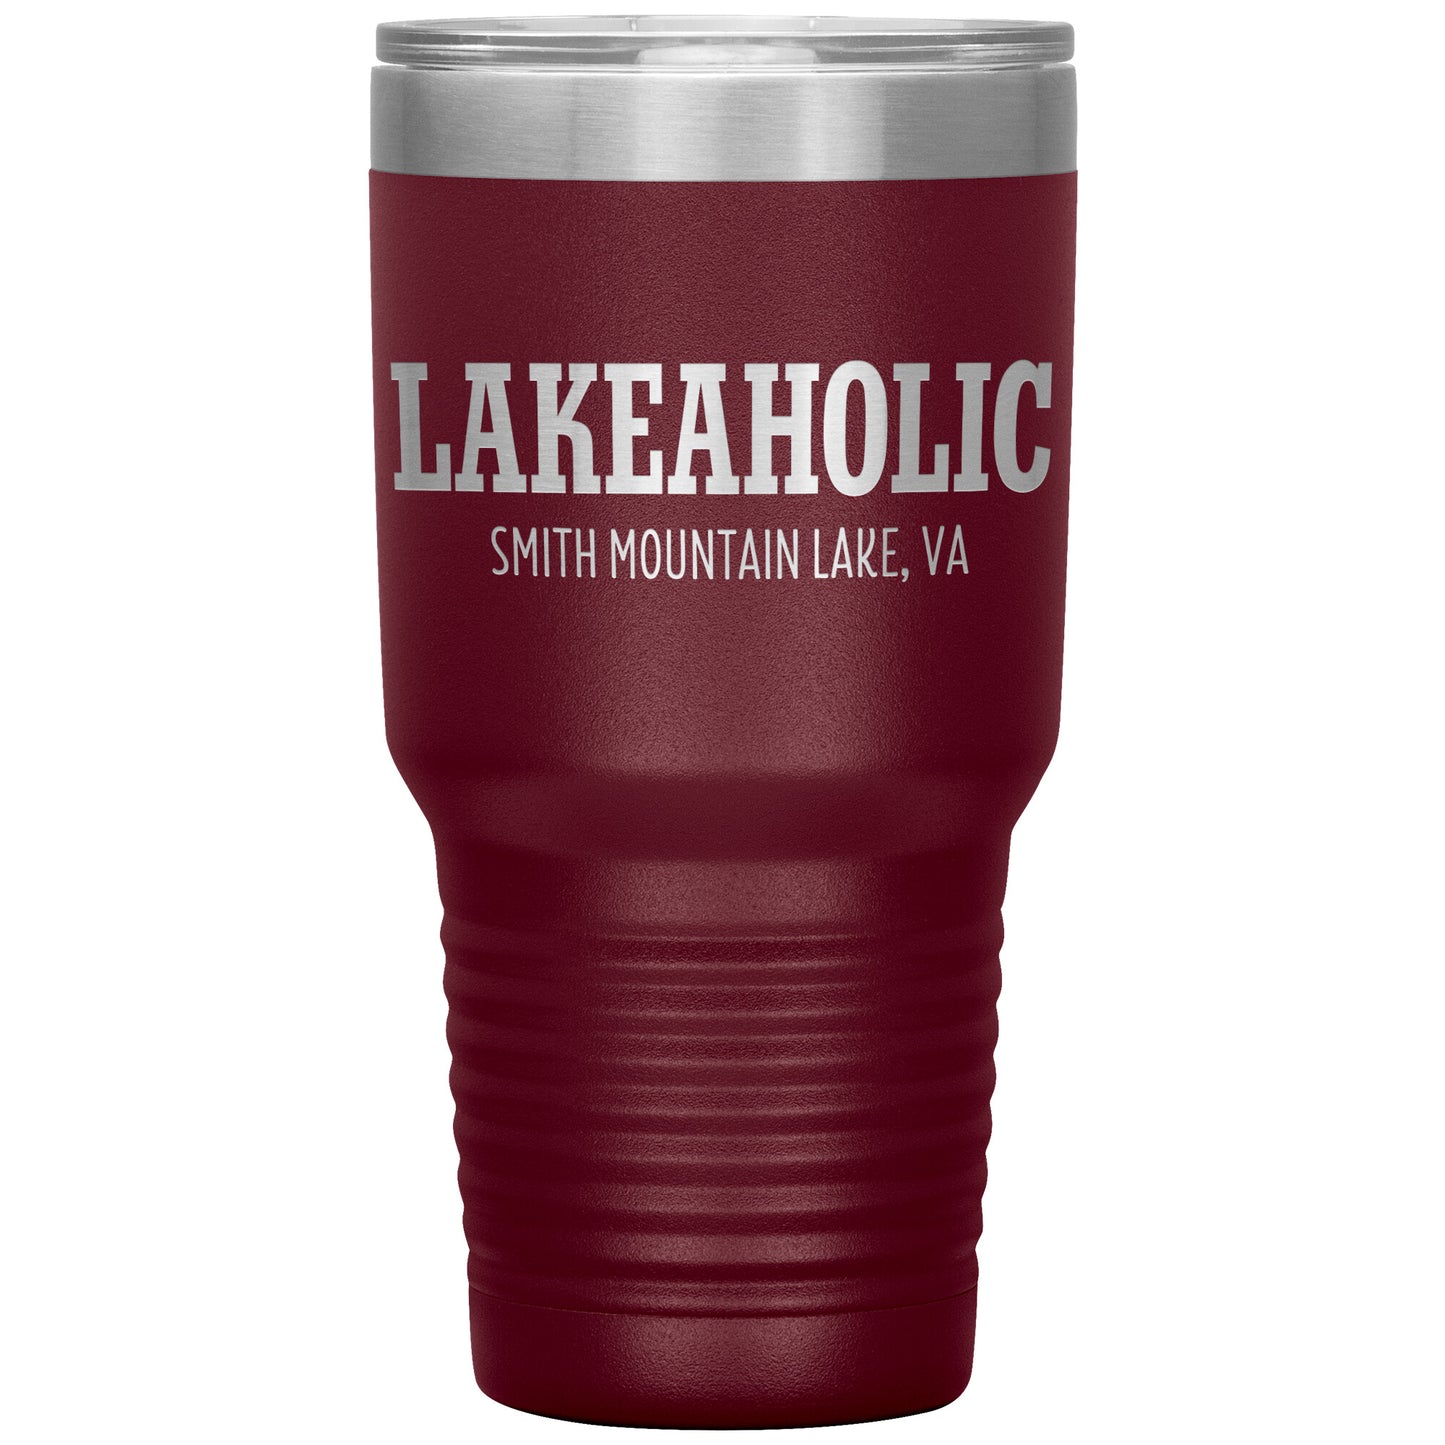 Lakeaholic Smith Mountain Lake - Laser Etched Drink Tumbler